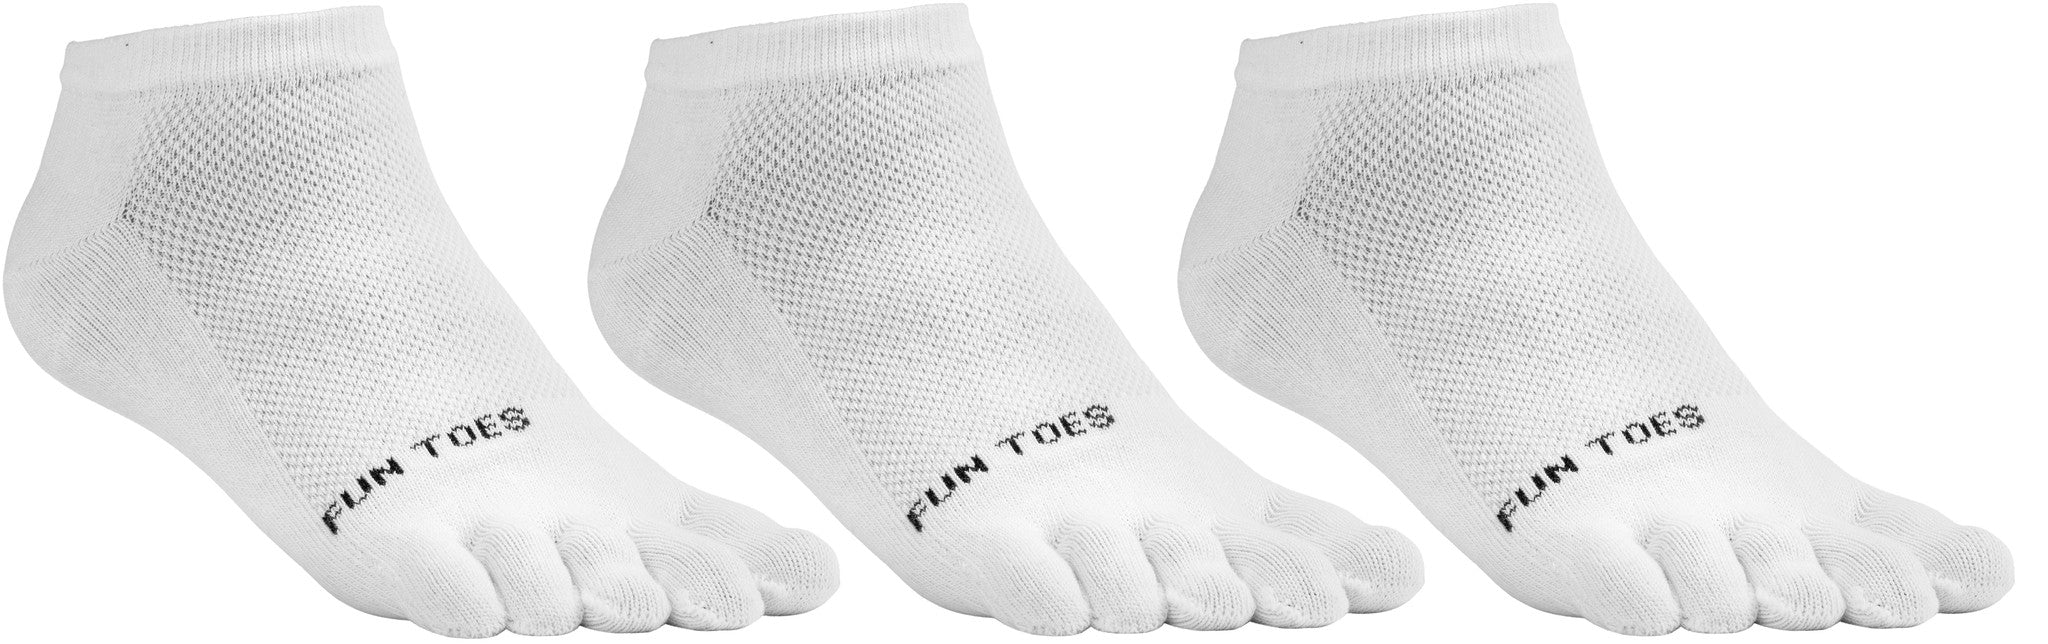 FUN TOES Women's Toe Socks Barefoot Running Socks Size 9-11 Shoe Size 4-10 Pack of 3 Pairs   White